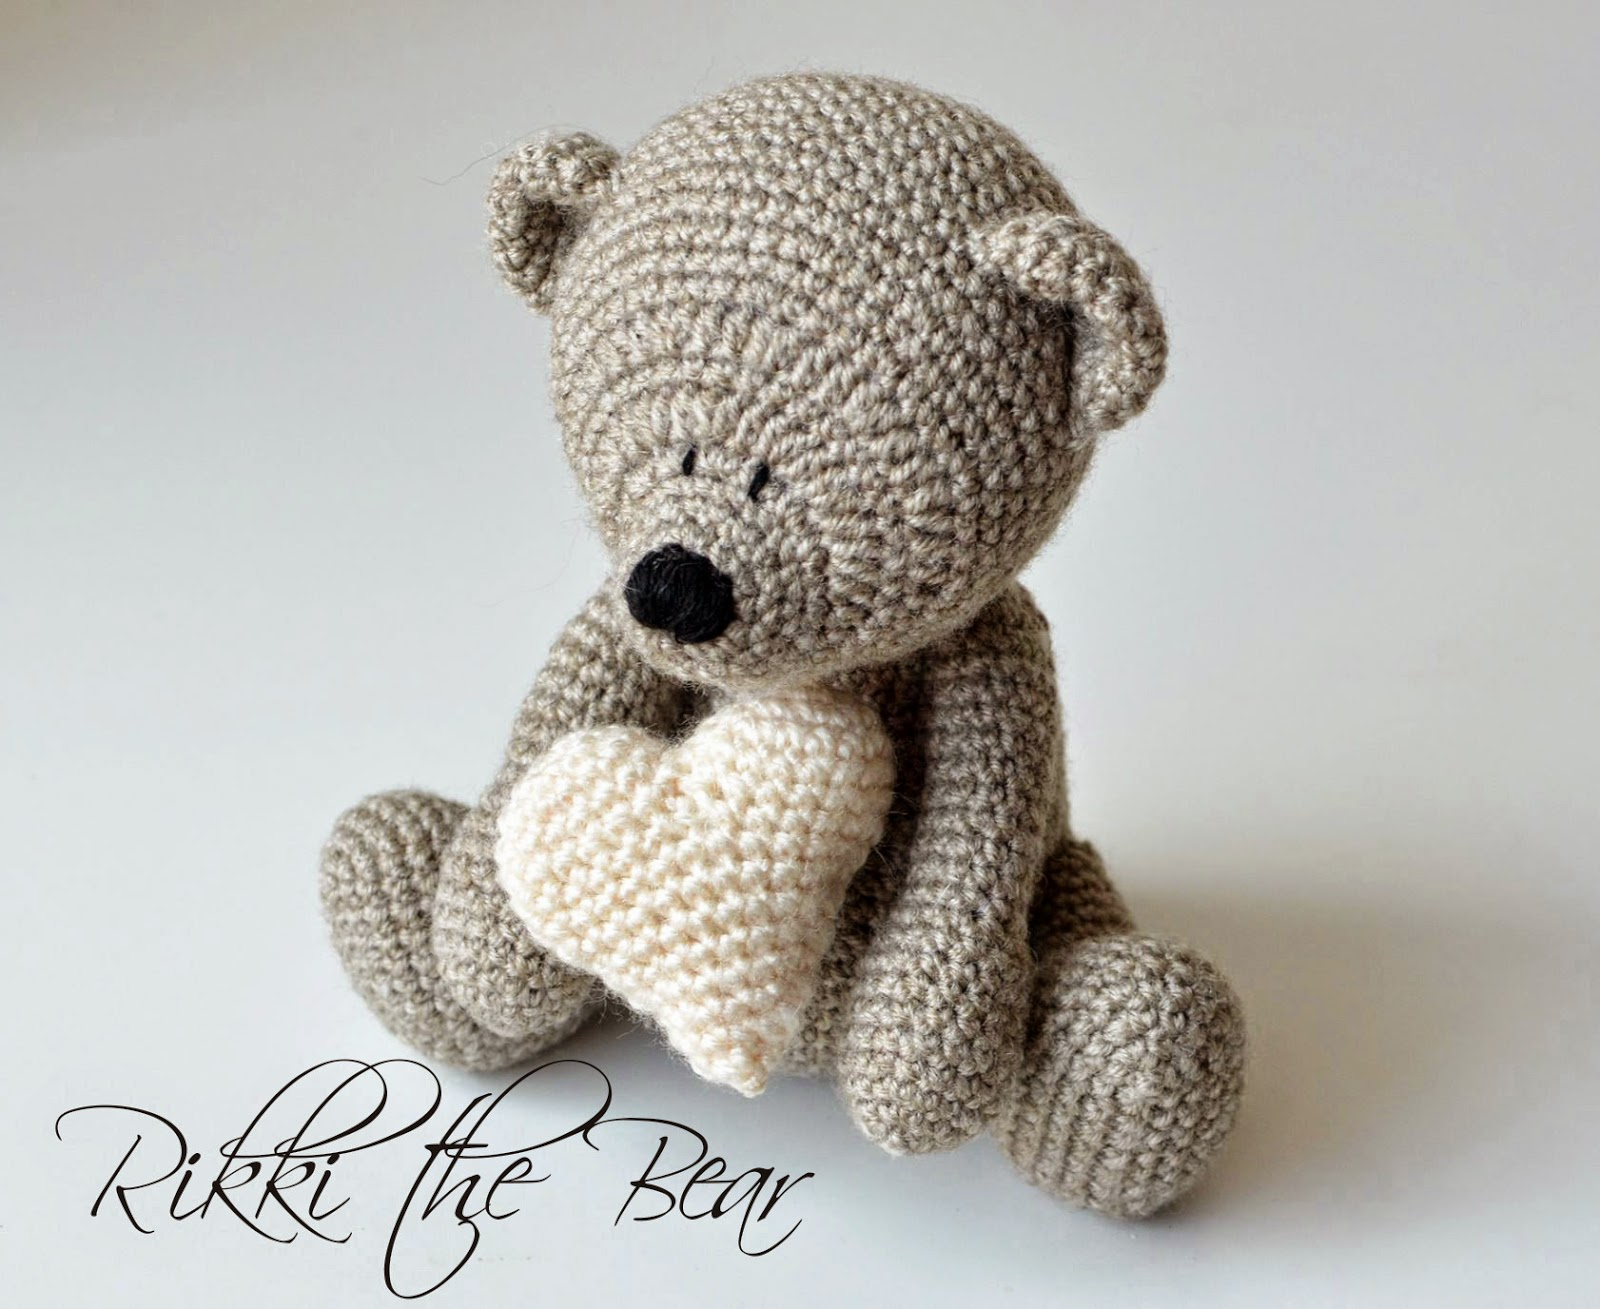 Teddy Bear Crochet Pattern Free Heart Pattern And My Rikki Bear Lillabjrns Crochet World